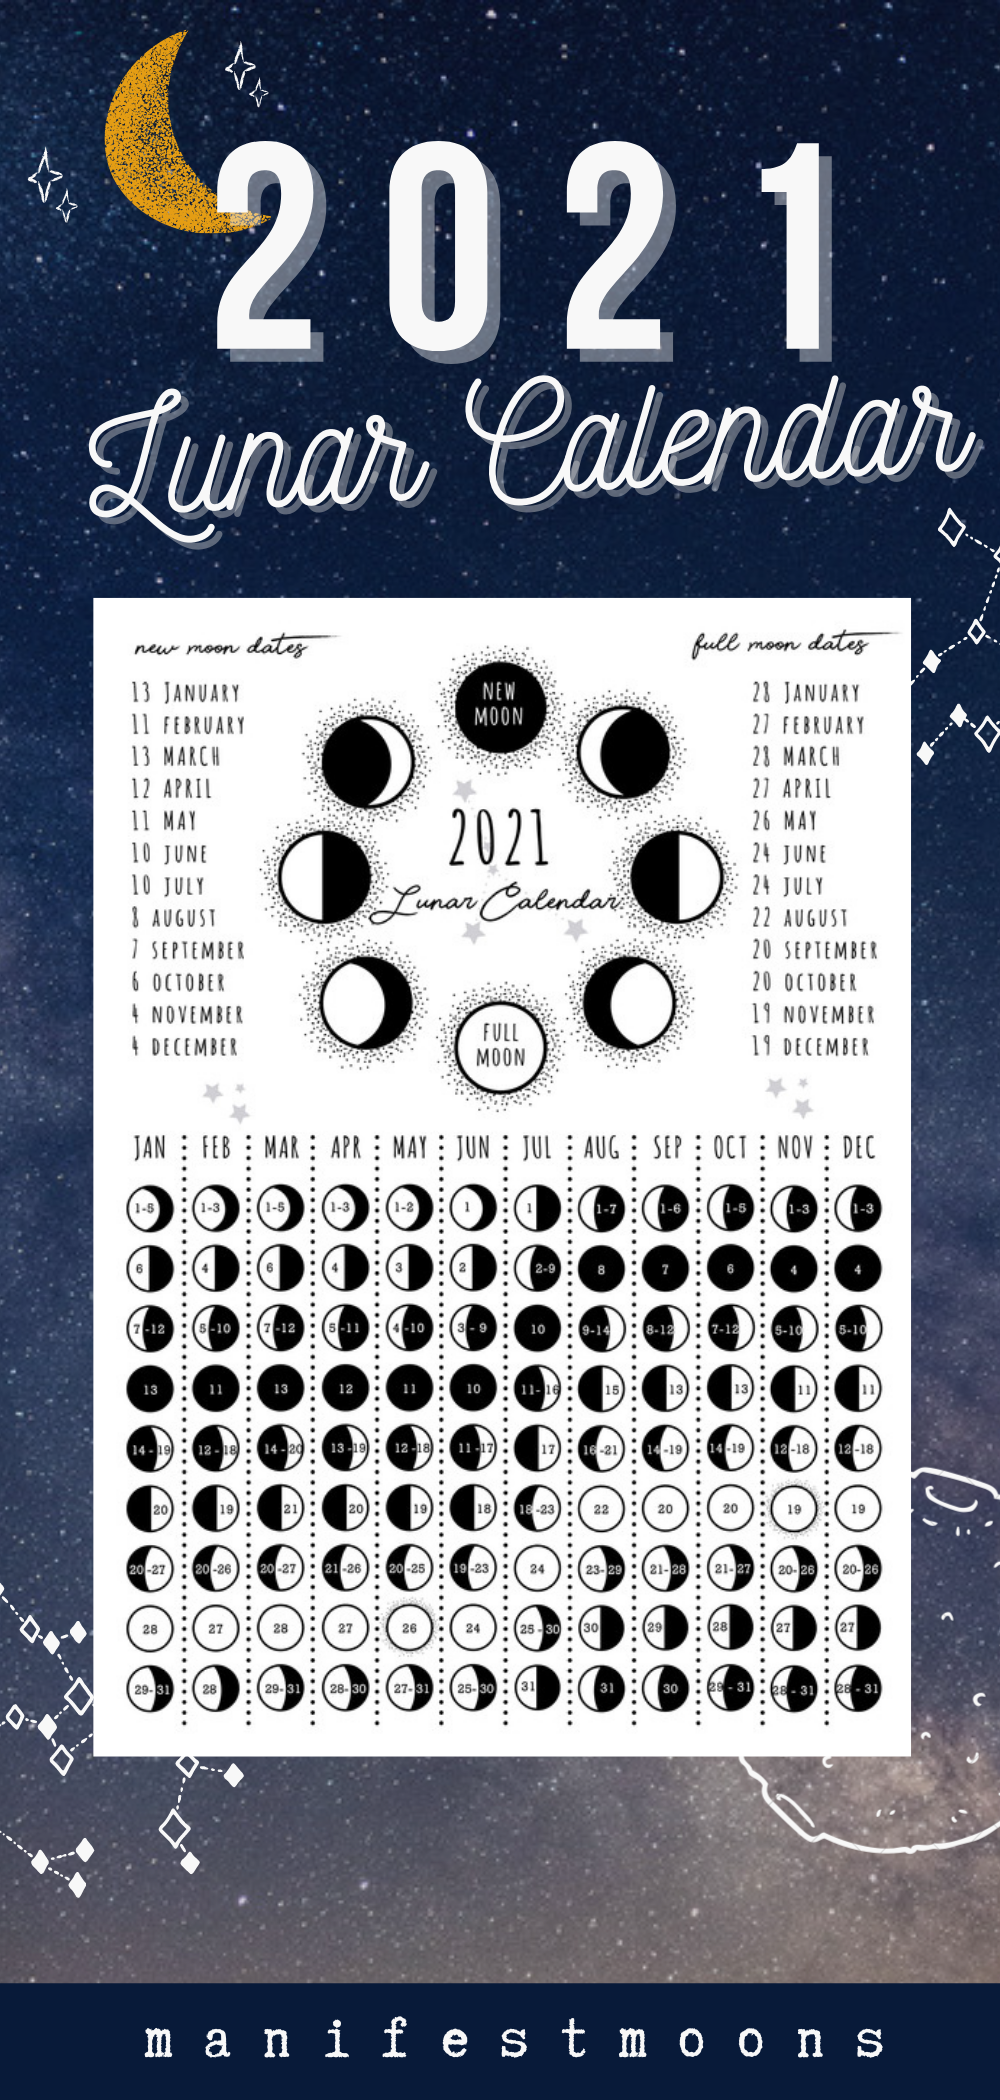 September 2021 Lunar Calendar 5